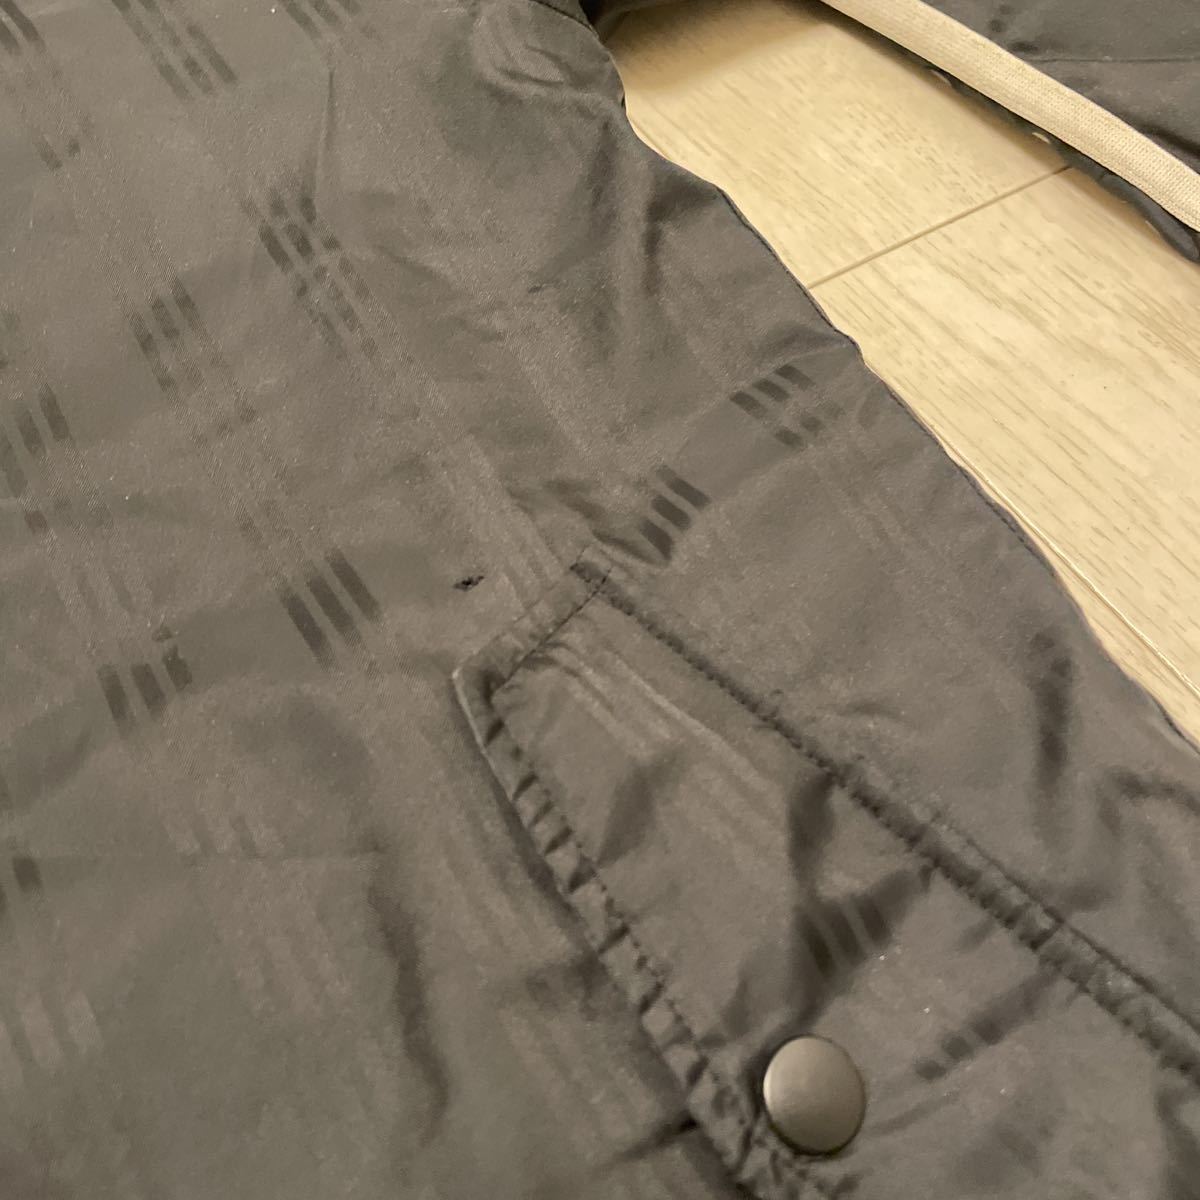  Adidas SHADOW long boa coat Junior size 130 with defect 